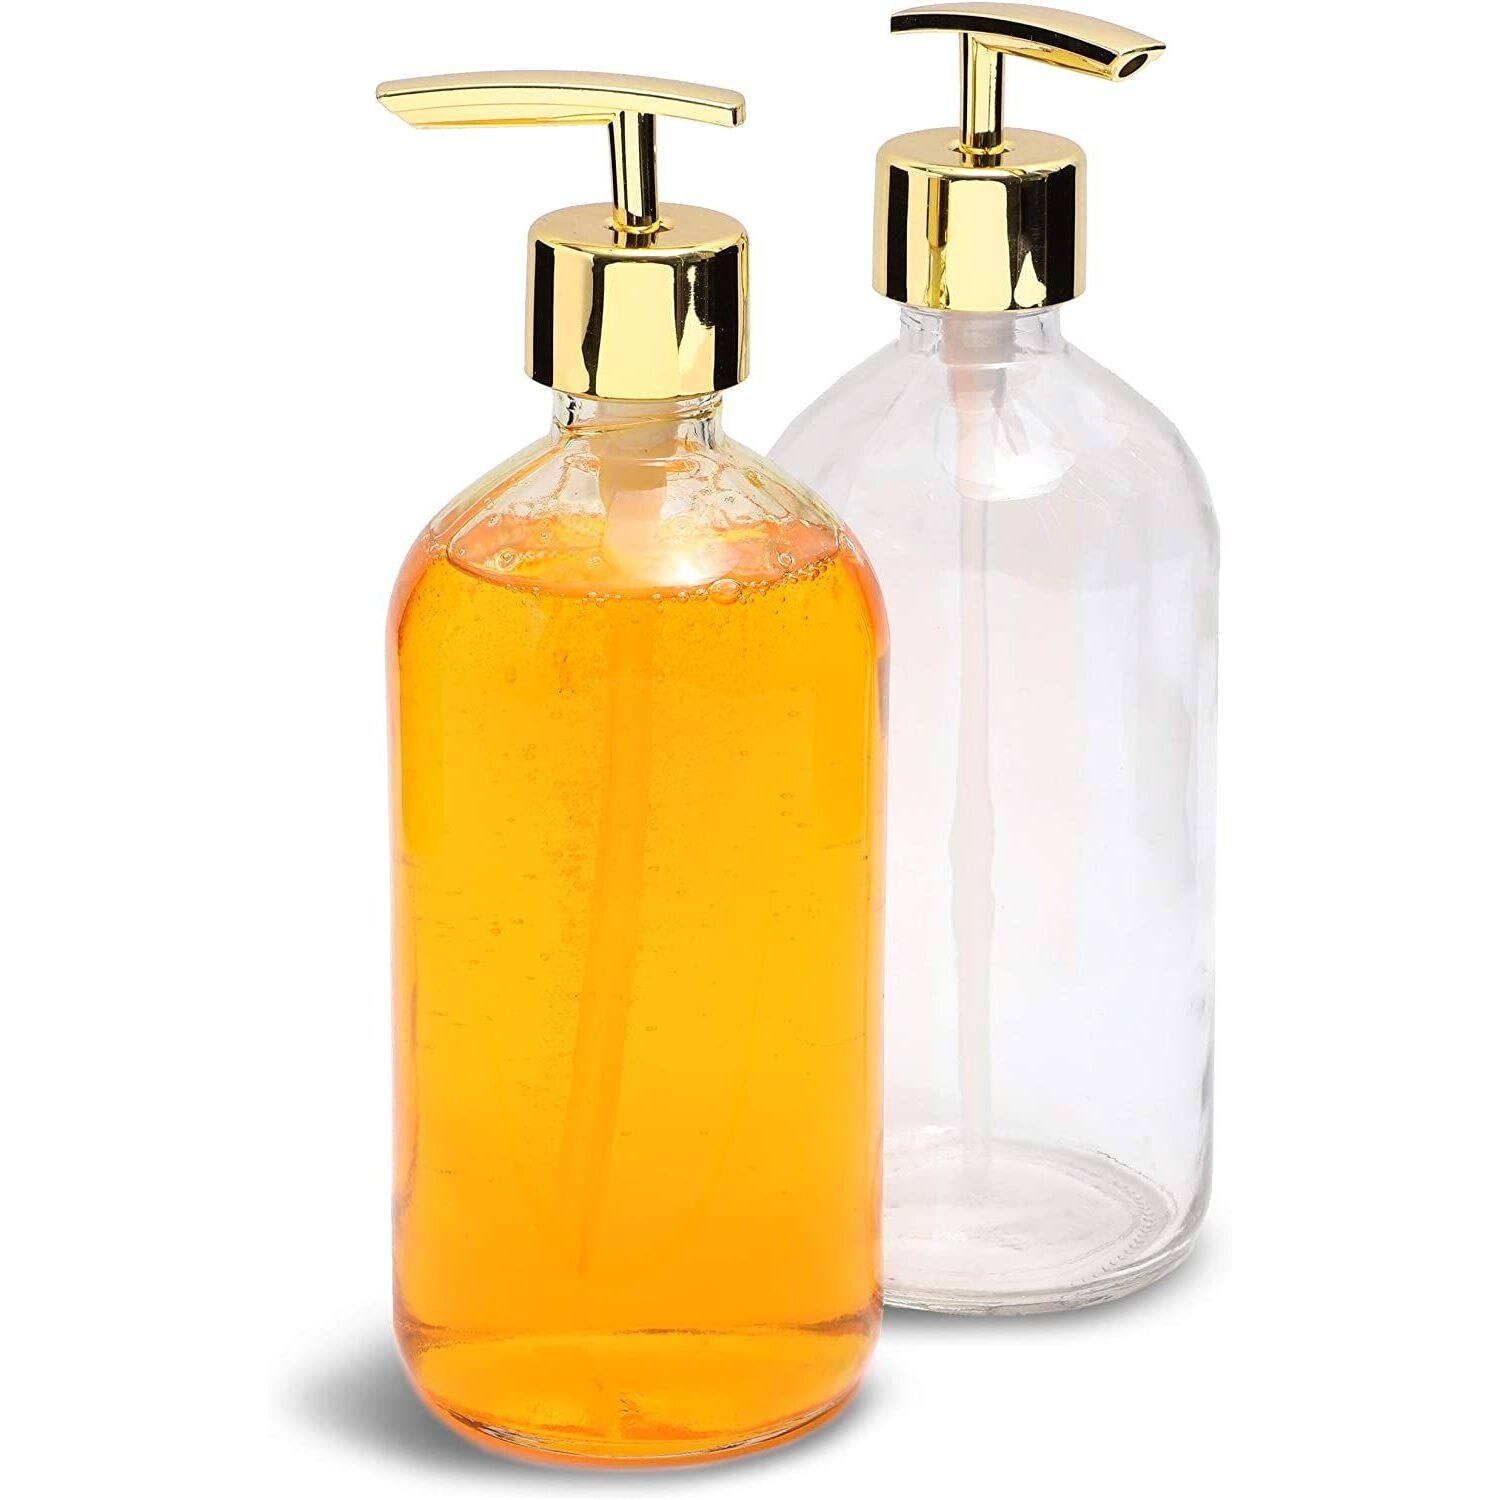 https://ak1.ostkcdn.com/images/products/is/images/direct/ba4db28e16b817ffd7ed5b97a198be44a8425920/2pcs-16oz-Clear-Glass-Kitchen-Bathroom-Hand-Soap-Dispenser-Bottle-%28Gold-Pump%29.jpg